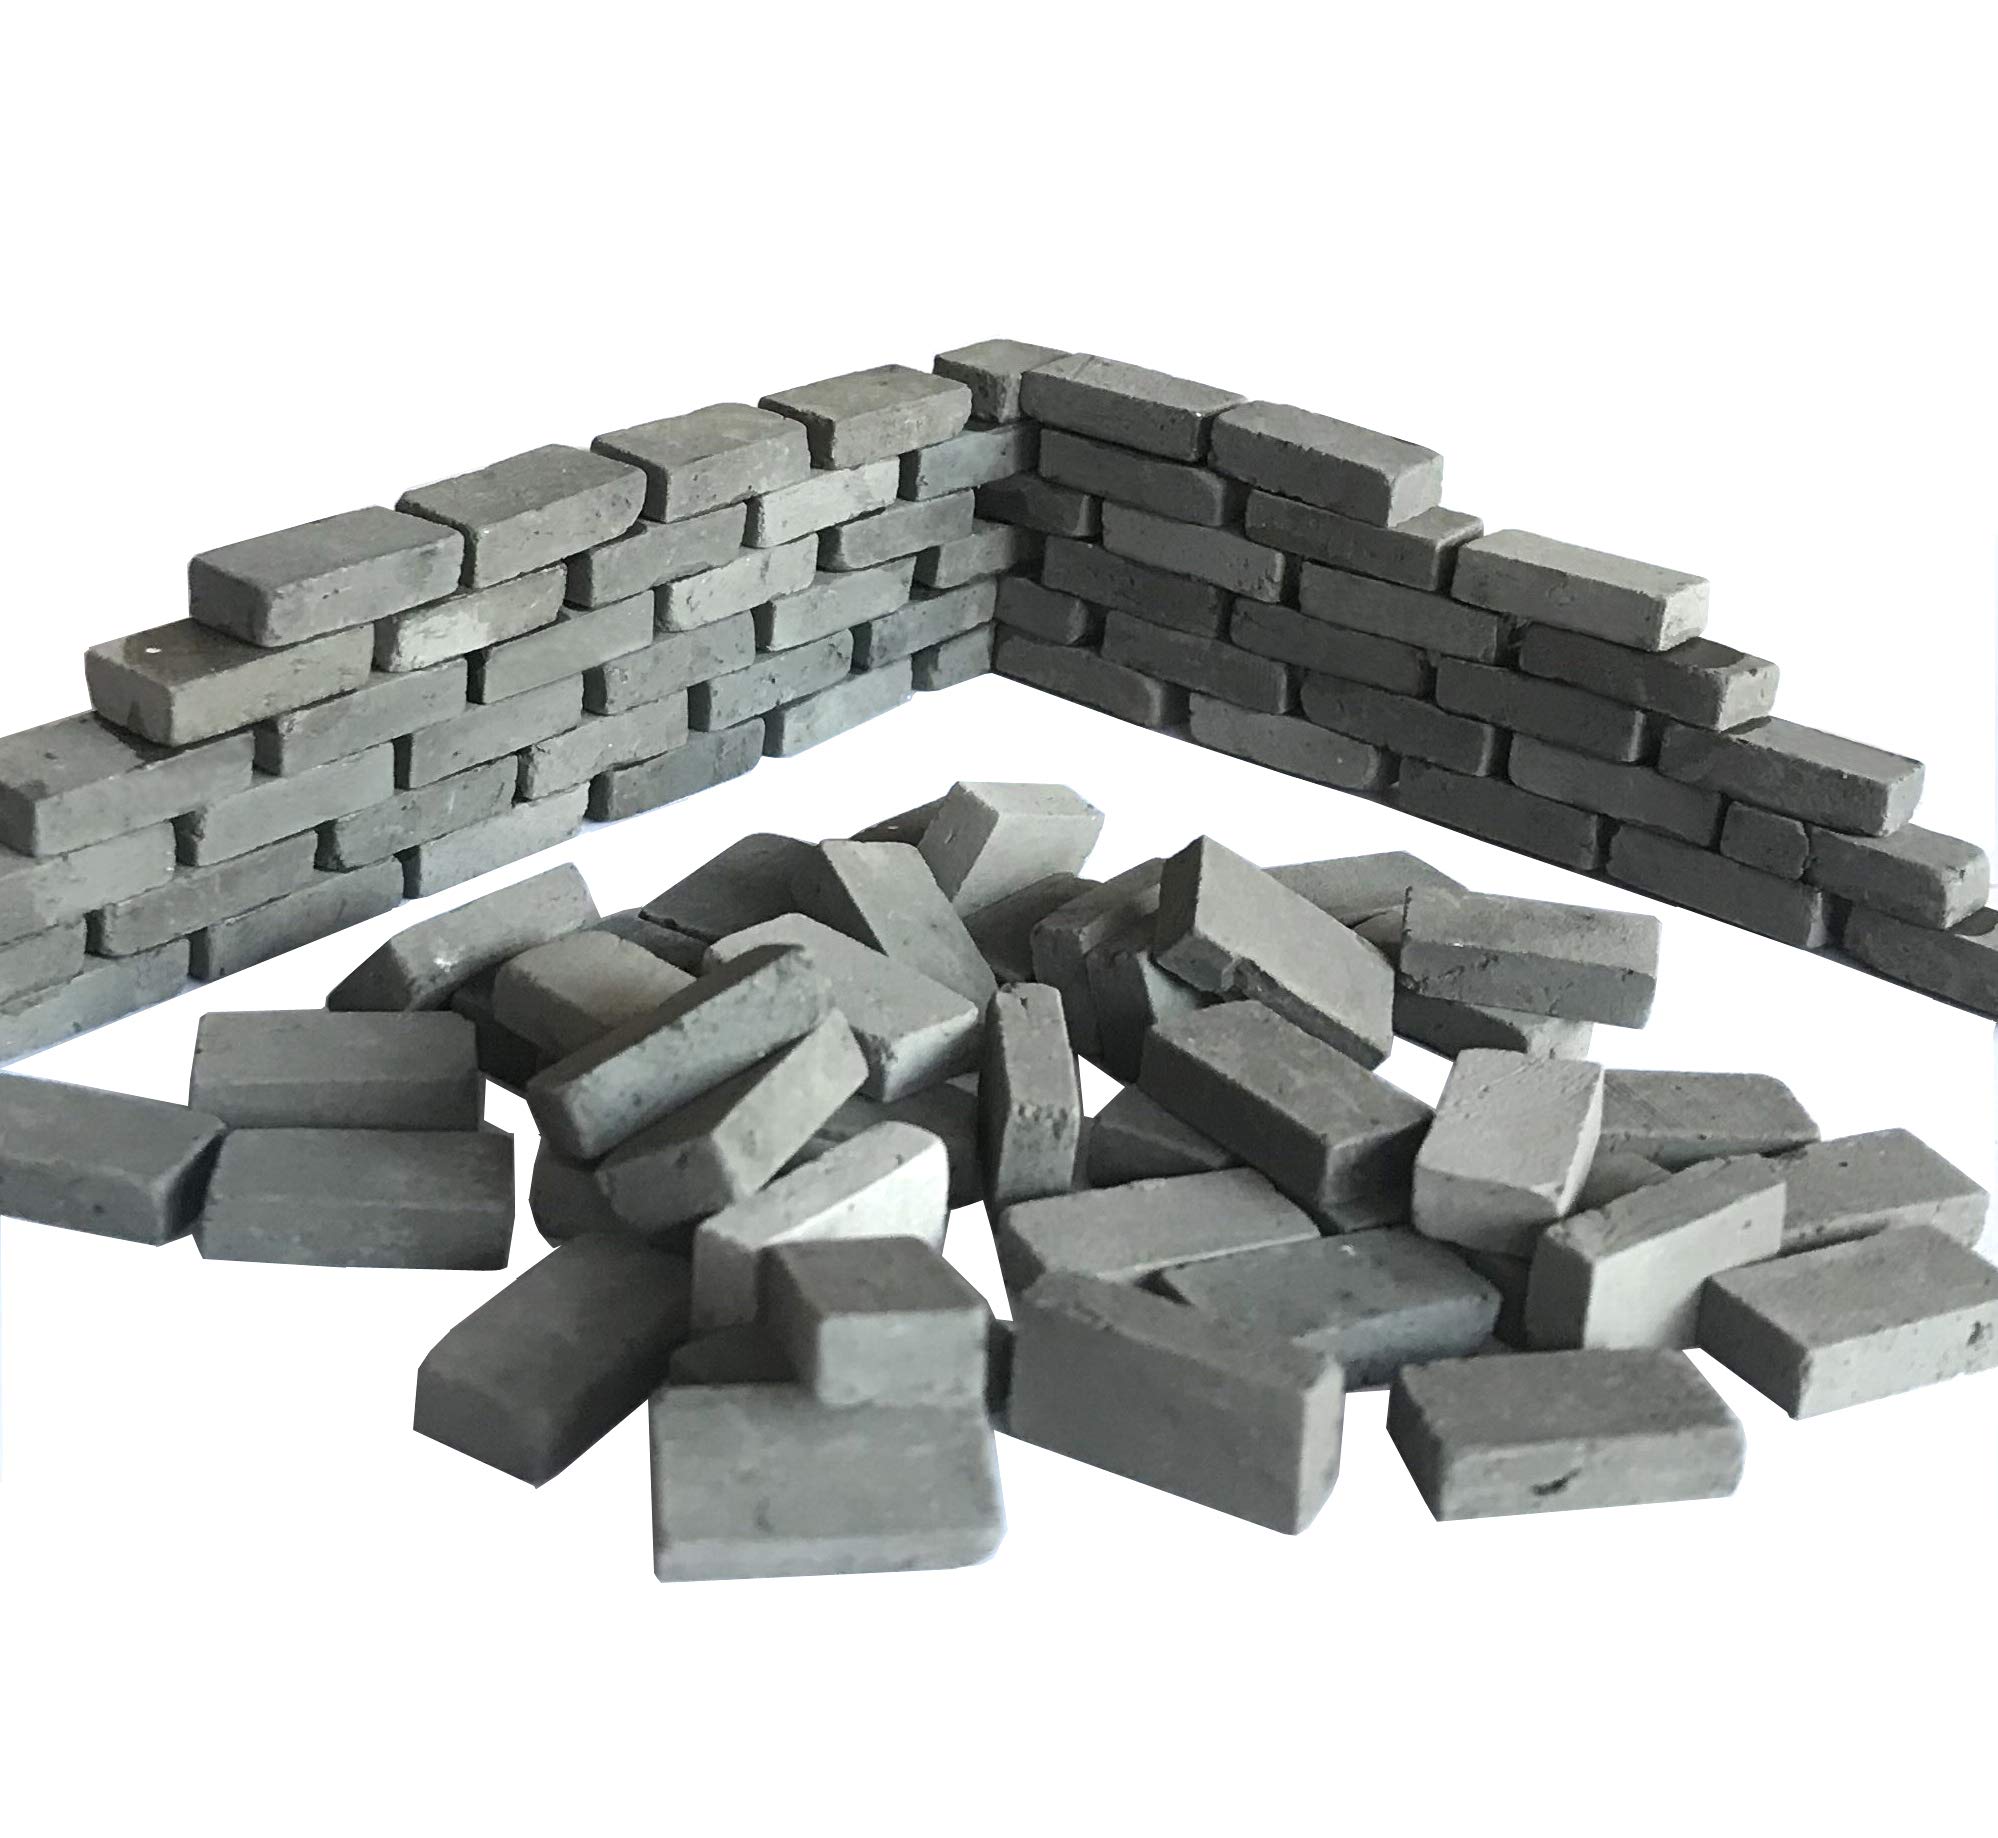 Lehung Miniature 1/16 Scale Wall Brick 200pcs Mini Clay Bricks Diorama Landscaping Accessories (Grey)